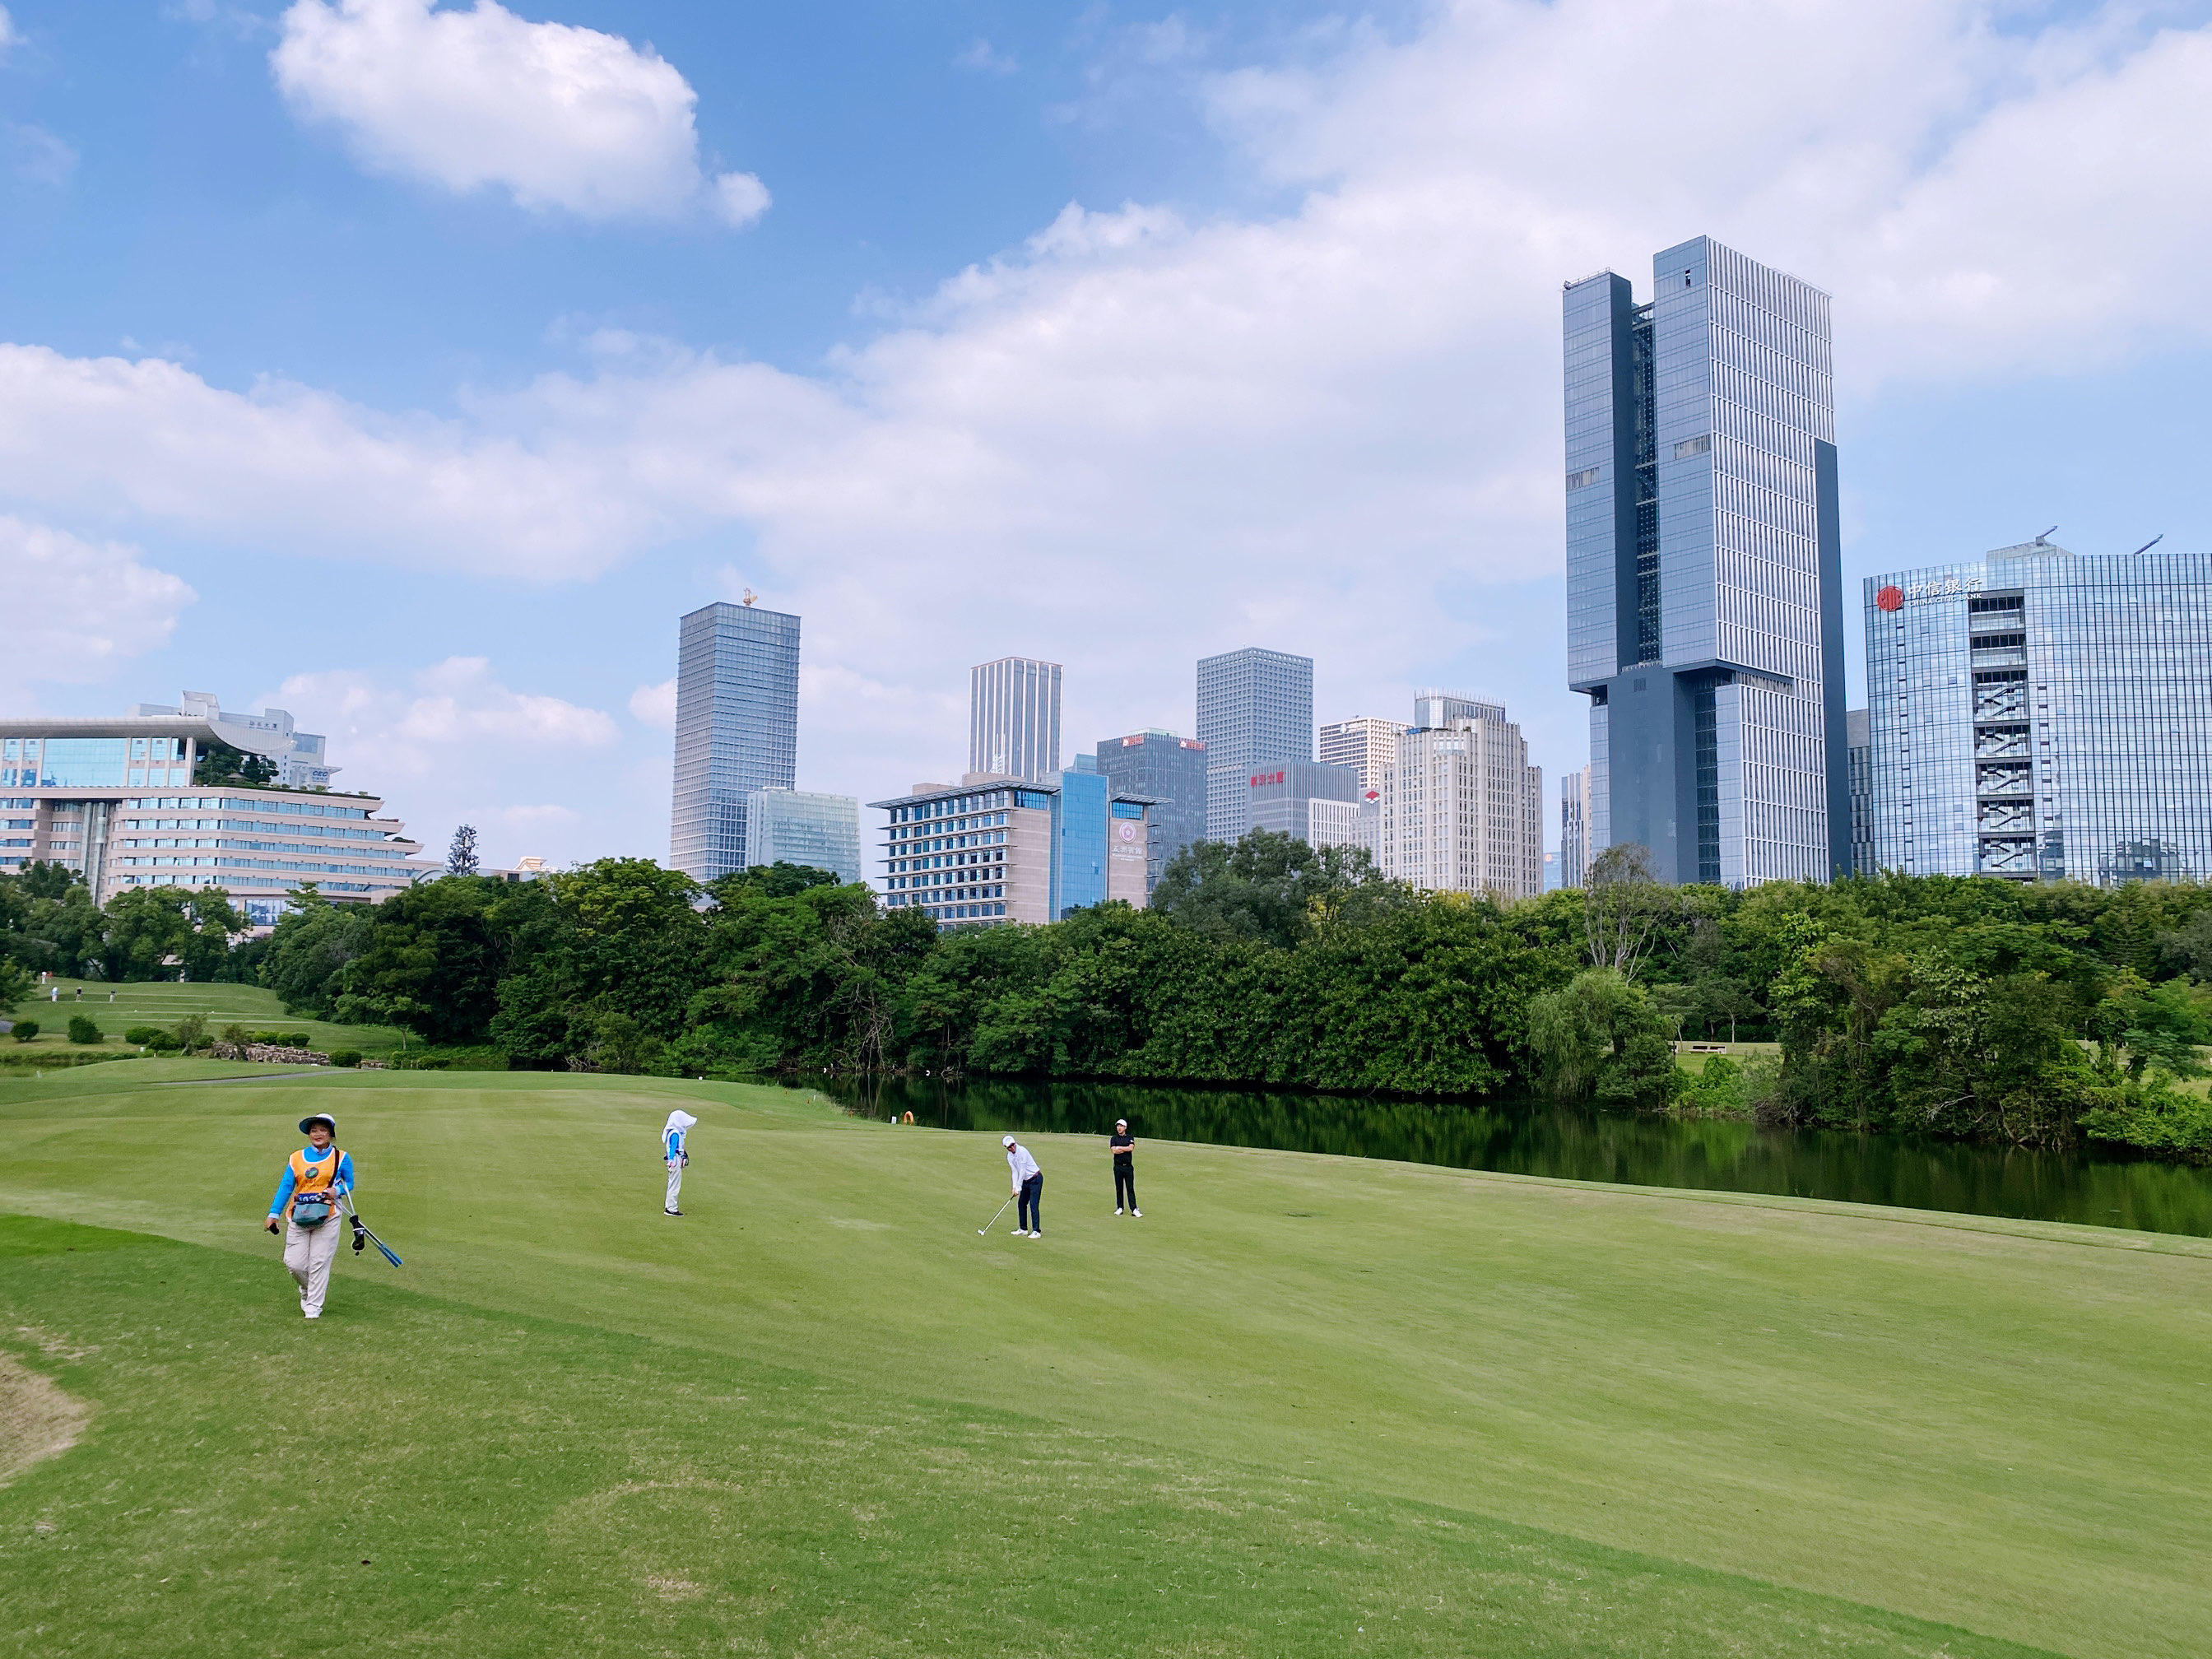 Shenzhen Golf Club: Tickets, Prices, Reviews & Guide | Trip.com